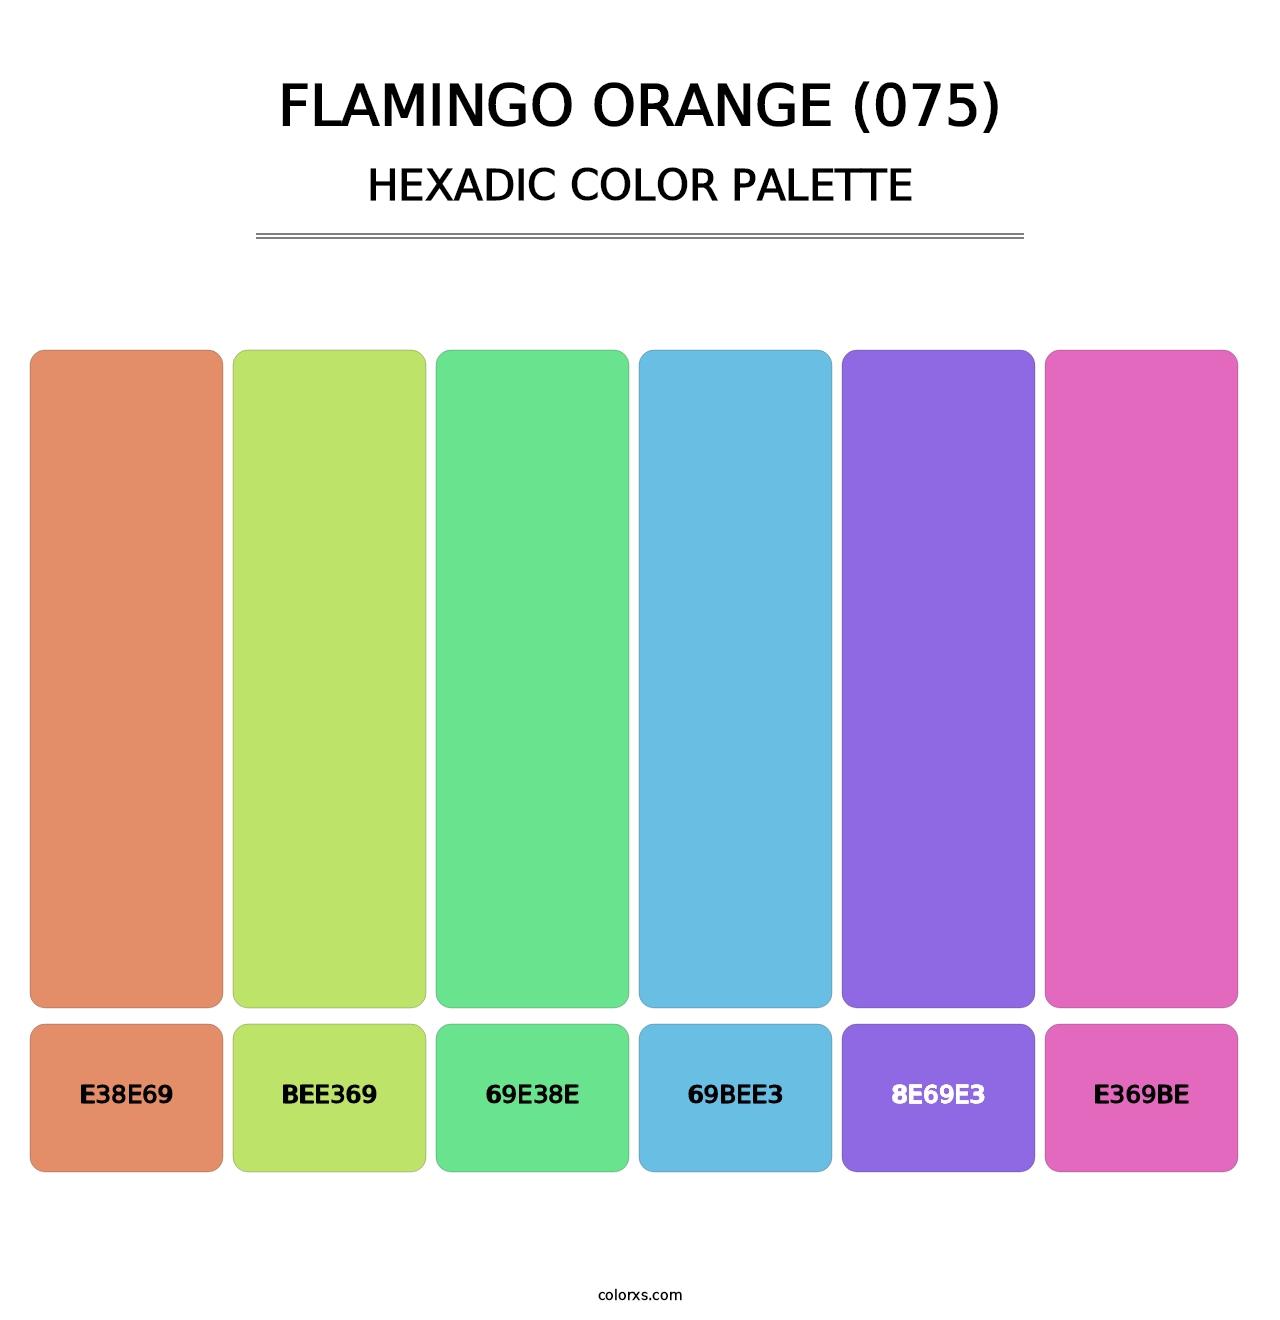 Flamingo Orange (075) - Hexadic Color Palette